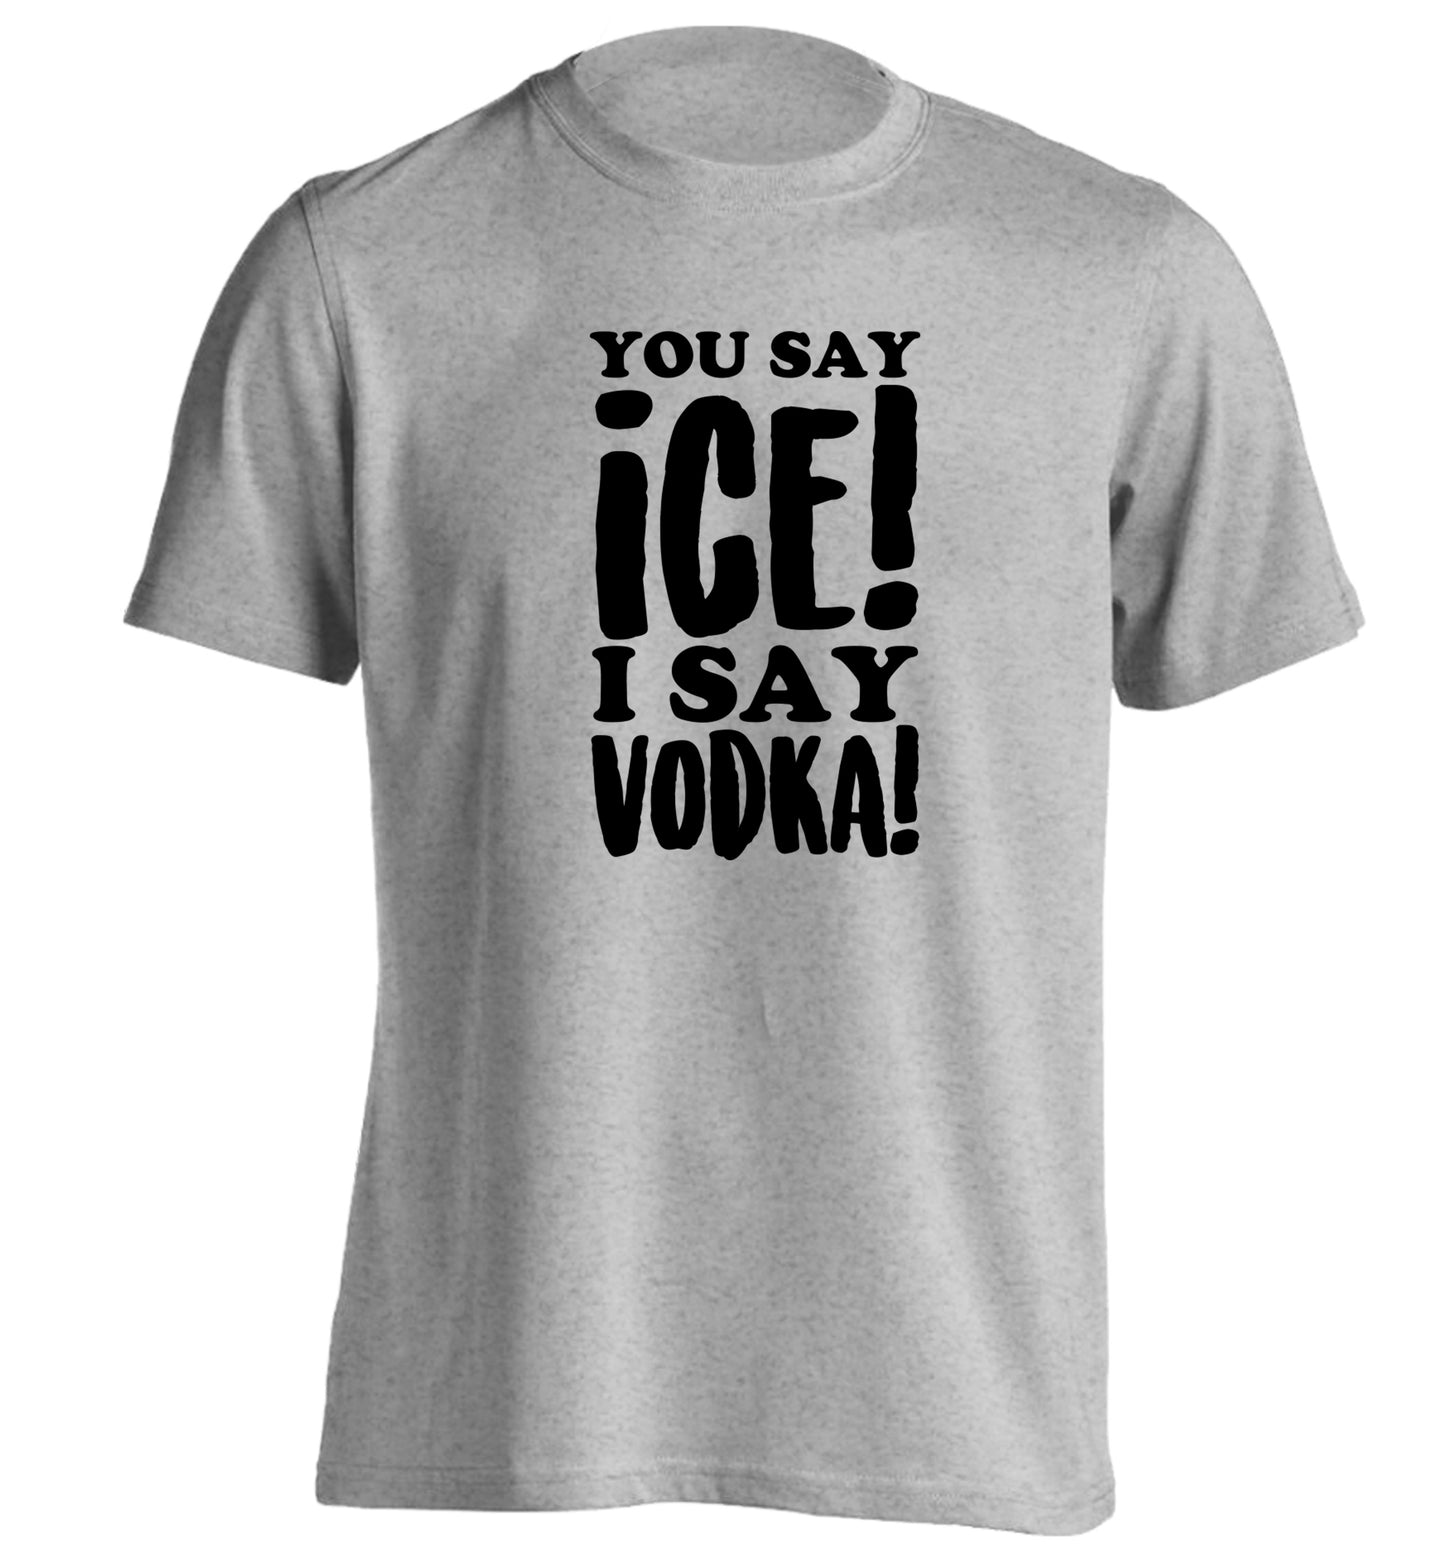 You say ice I say vodka! adults unisex grey Tshirt 2XL